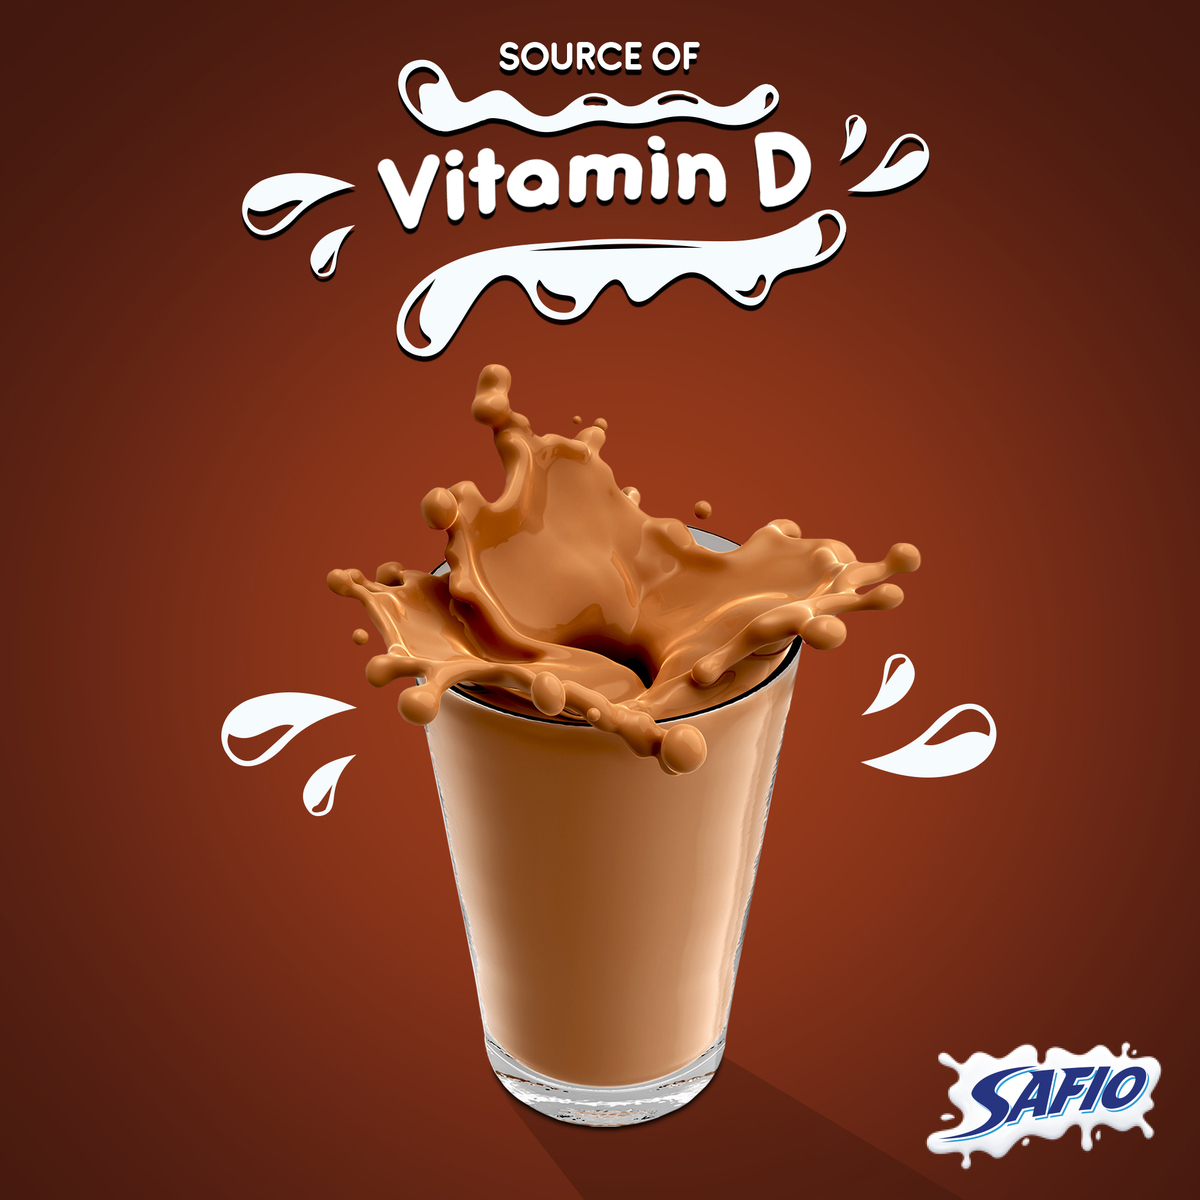 Safio UHT Milk Chocolate Flavor 6 x 125ml